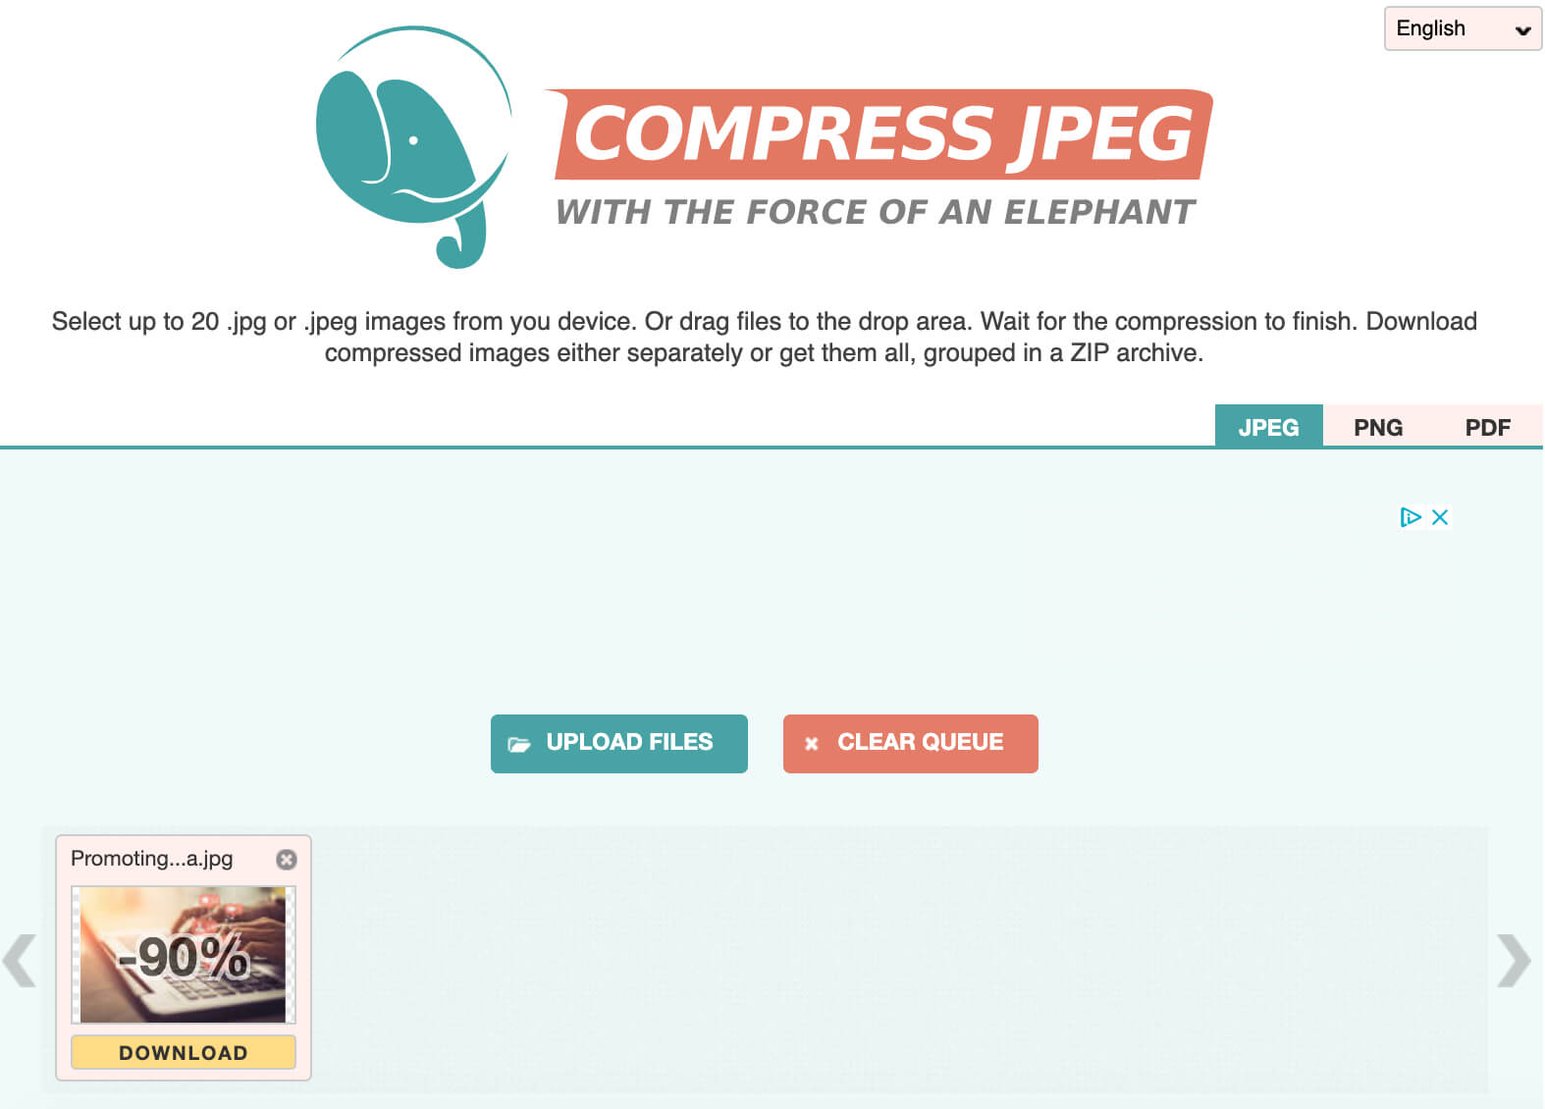 9. Compress JPG